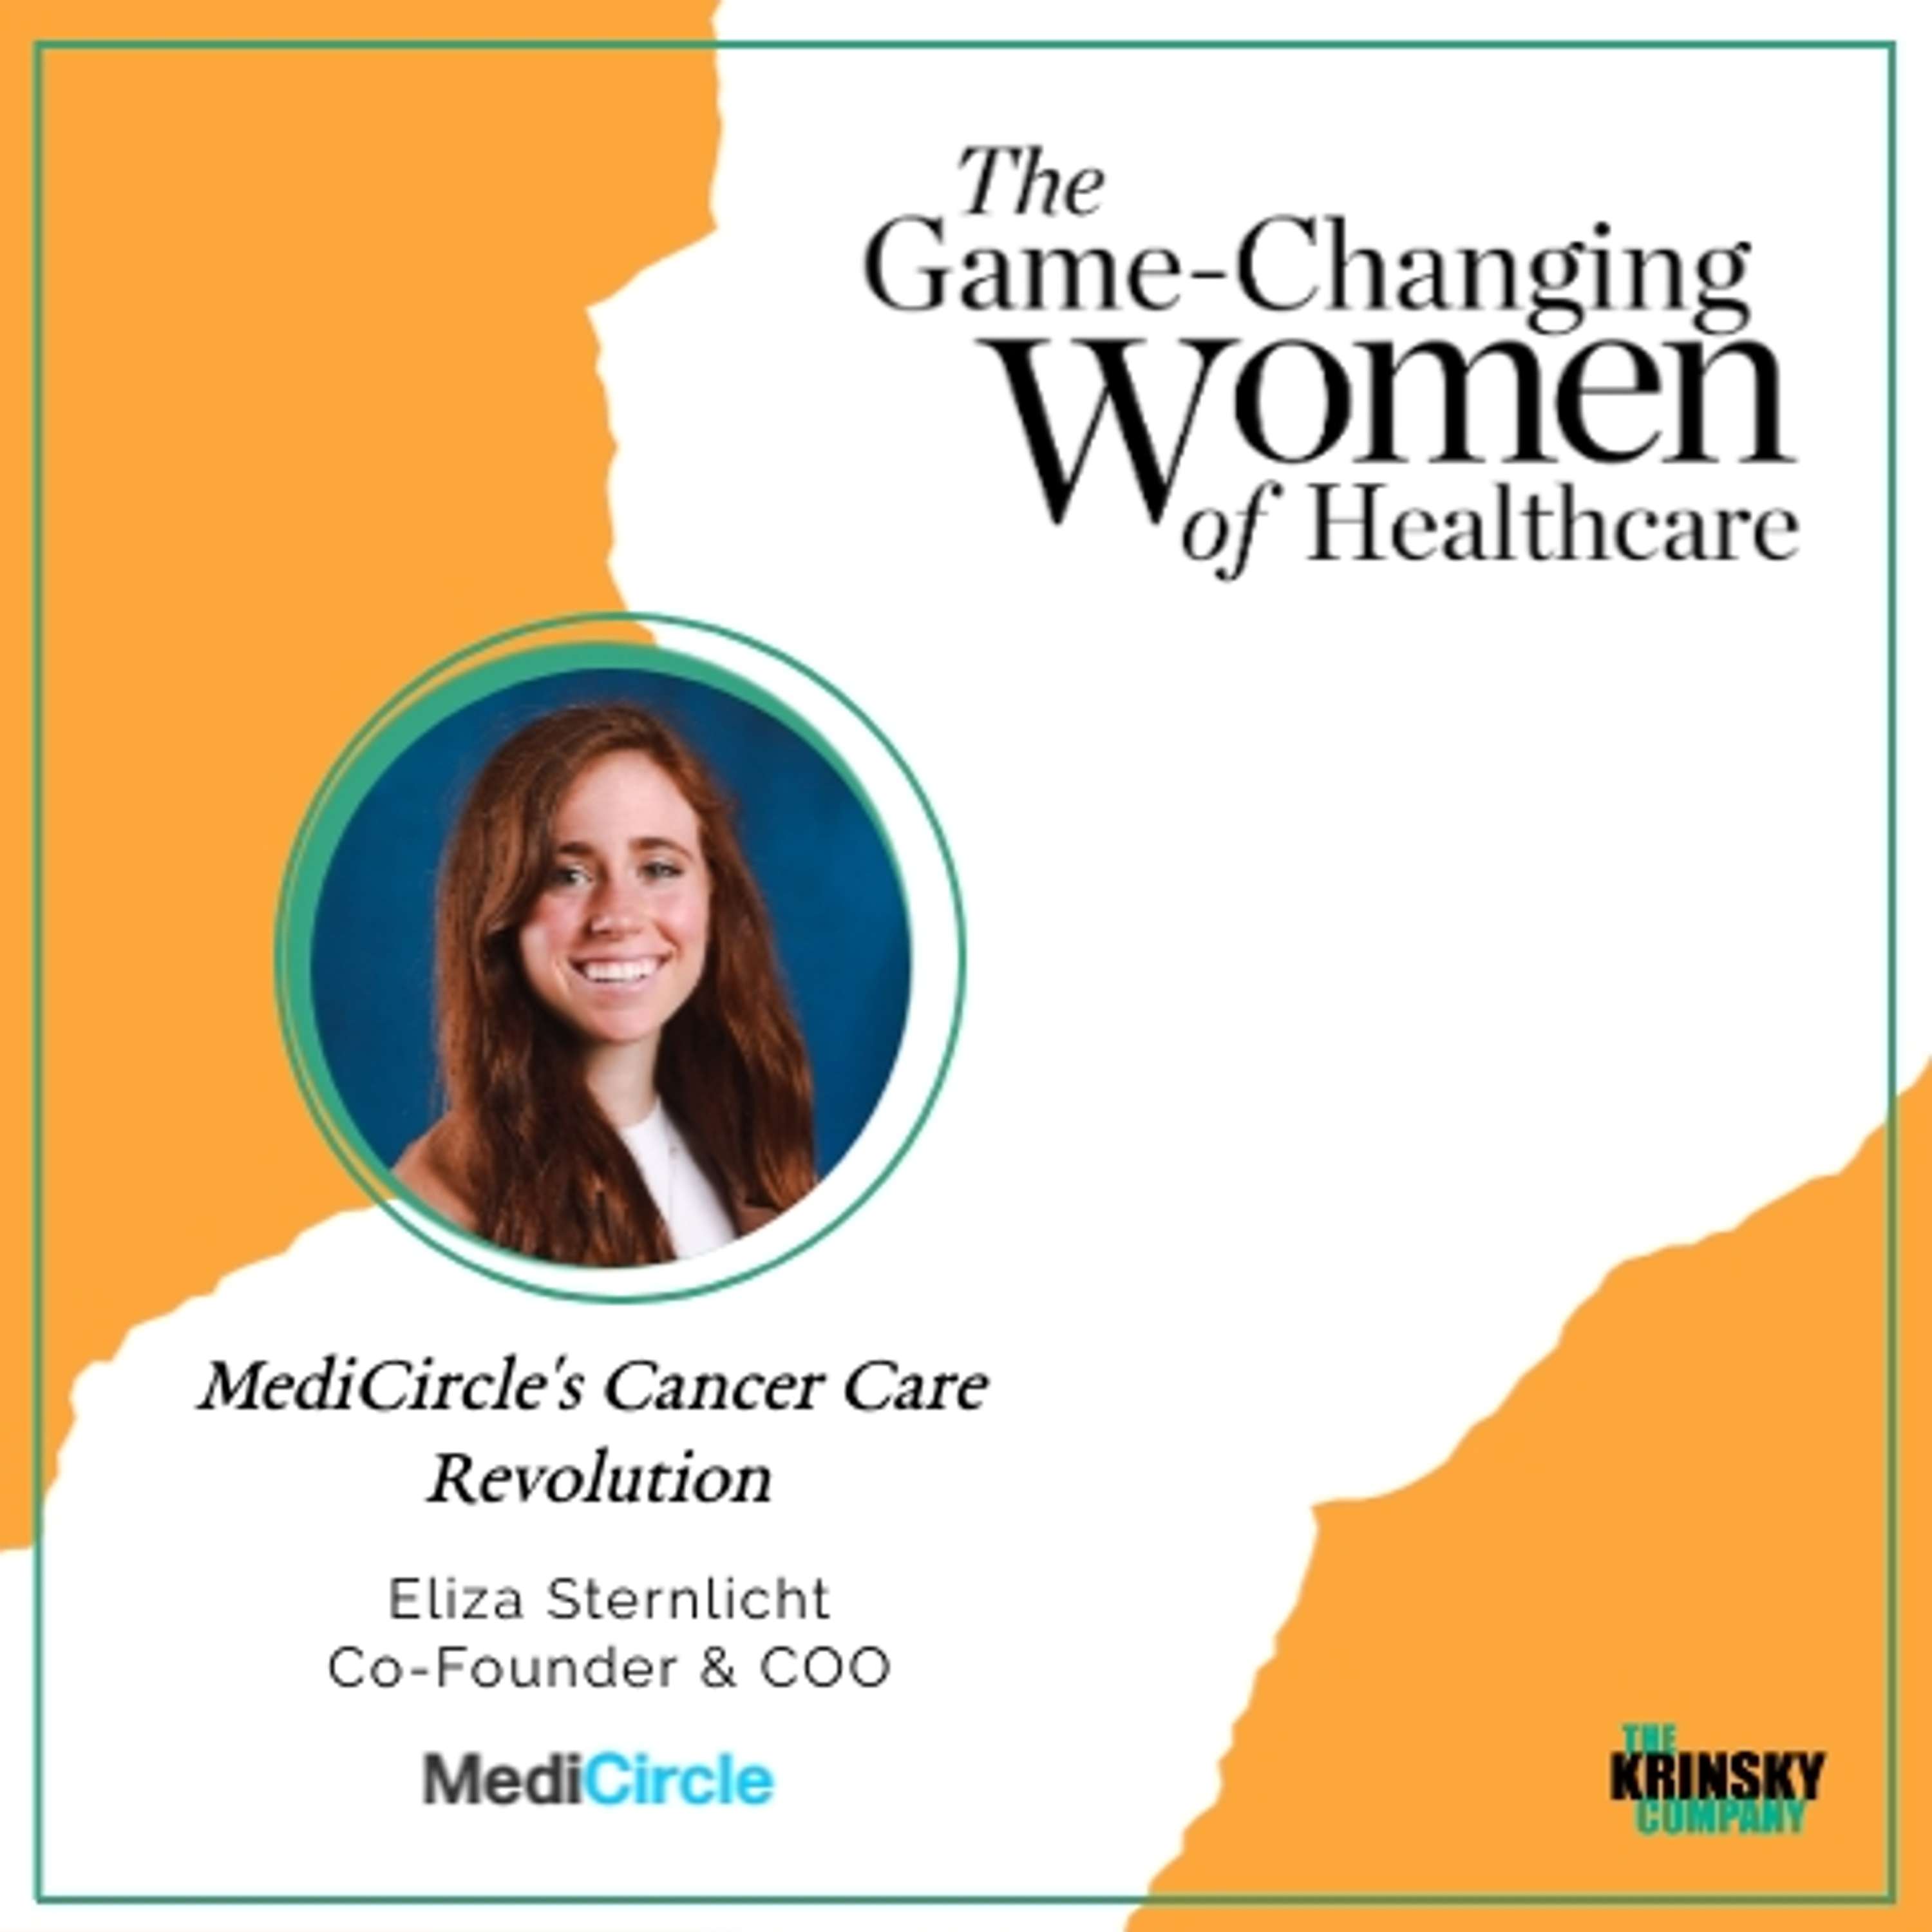 Eliza Sternlicht: MediCircle's Cancer Care Revolution